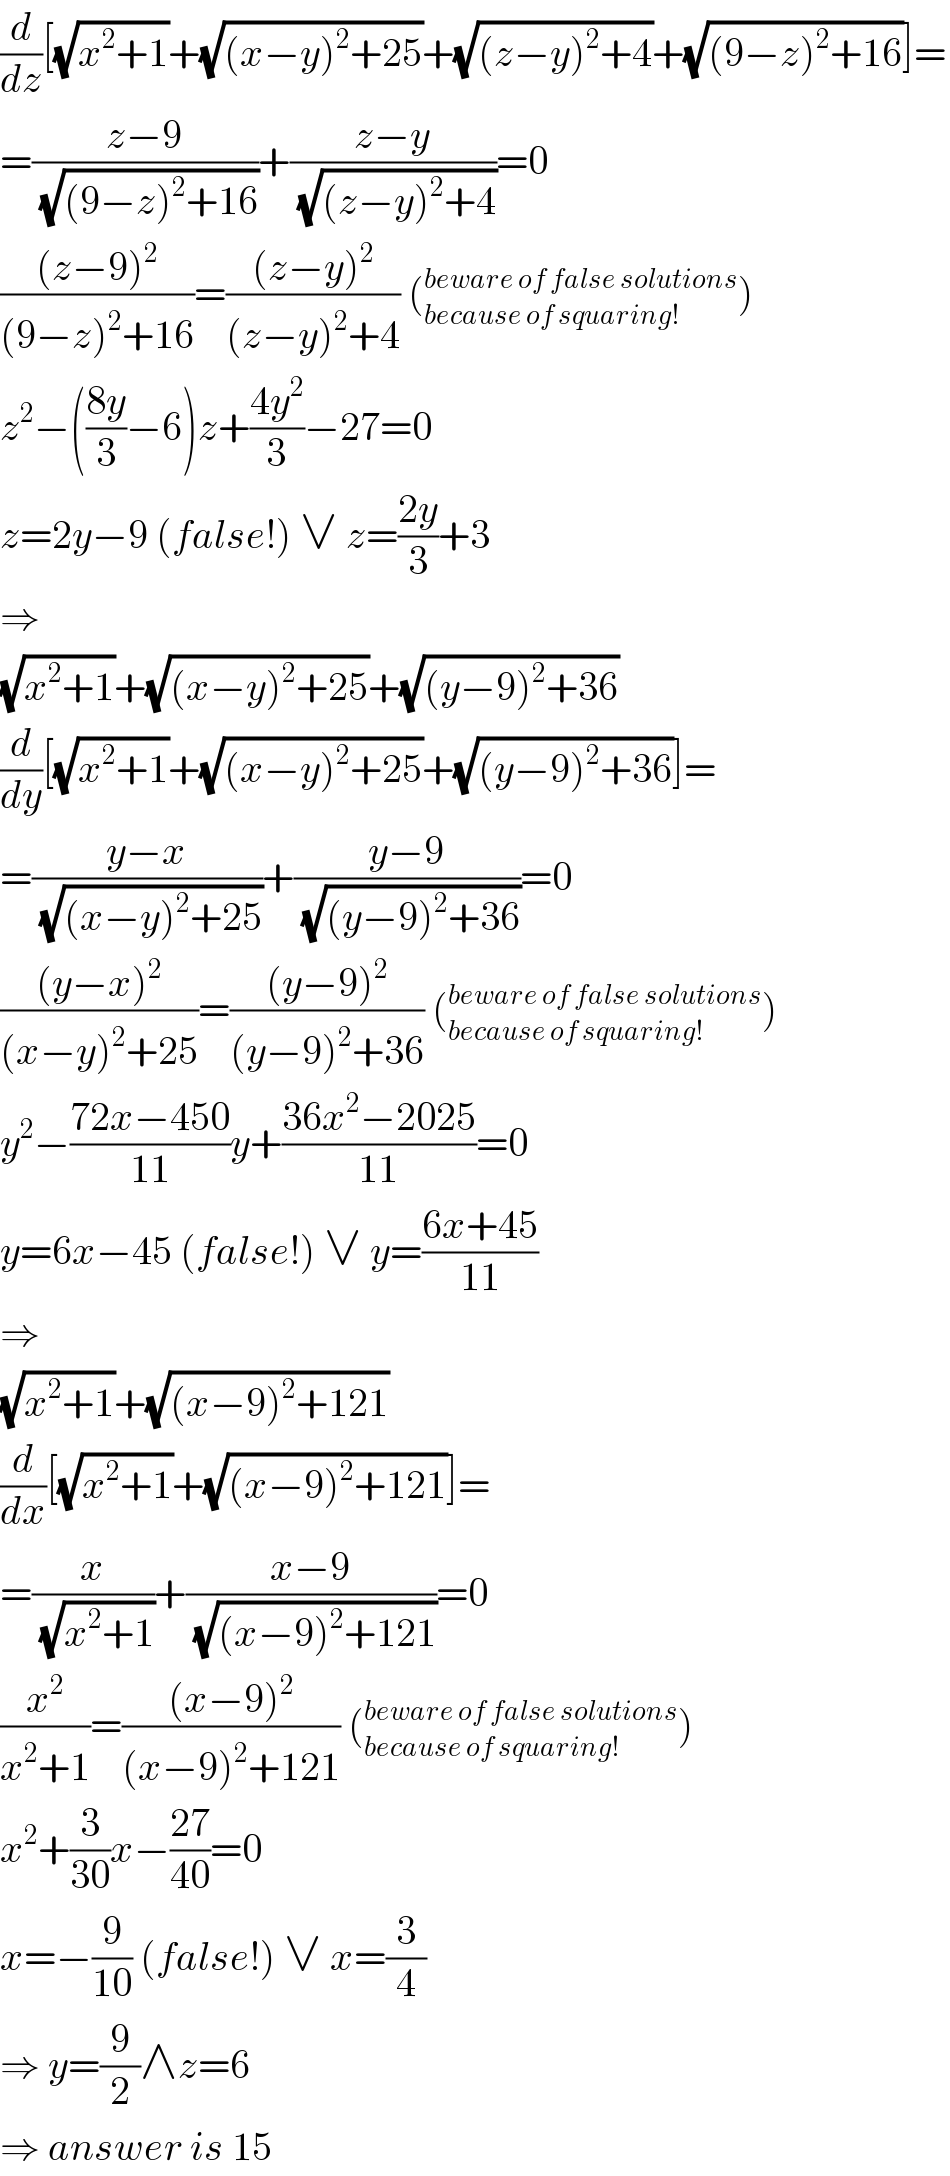 (d/dz)[(√(x^2 +1))+(√((x−y)^2 +25))+(√((z−y)^2 +4))+(√((9−z)^2 +16))]=  =((z−9)/( (√((9−z)^2 +16))))+((z−y)/( (√((z−y)^2 +4))))=0  (((z−9)^2 )/((9−z)^2 +16))=(((z−y)^2 )/((z−y)^2 +4)) (_(because of squaring!) ^(beware of false solutions) )  z^2 −(((8y)/3)−6)z+((4y^2 )/3)−27=0  z=2y−9 (false!) ∨ z=((2y)/3)+3  ⇒  (√(x^2 +1))+(√((x−y)^2 +25))+(√((y−9)^2 +36))  (d/dy)[(√(x^2 +1))+(√((x−y)^2 +25))+(√((y−9)^2 +36))]=  =((y−x)/( (√((x−y)^2 +25))))+((y−9)/( (√((y−9)^2 +36))))=0  (((y−x)^2 )/((x−y)^2 +25))=(((y−9)^2 )/((y−9)^2 +36)) (_(because of squaring!) ^(beware of false solutions) )  y^2 −((72x−450)/(11))y+((36x^2 −2025)/(11))=0  y=6x−45 (false!) ∨ y=((6x+45)/(11))  ⇒  (√(x^2 +1))+(√((x−9)^2 +121))  (d/dx)[(√(x^2 +1))+(√((x−9)^2 +121))]=  =(x/( (√(x^2 +1))))+((x−9)/( (√((x−9)^2 +121))))=0  (x^2 /(x^2 +1))=(((x−9)^2 )/((x−9)^2 +121)) (_(because of squaring!) ^(beware of false solutions) )  x^2 +(3/(30))x−((27)/(40))=0  x=−(9/(10)) (false!) ∨ x=(3/4)  ⇒ y=(9/2)∧z=6  ⇒ answer is 15  